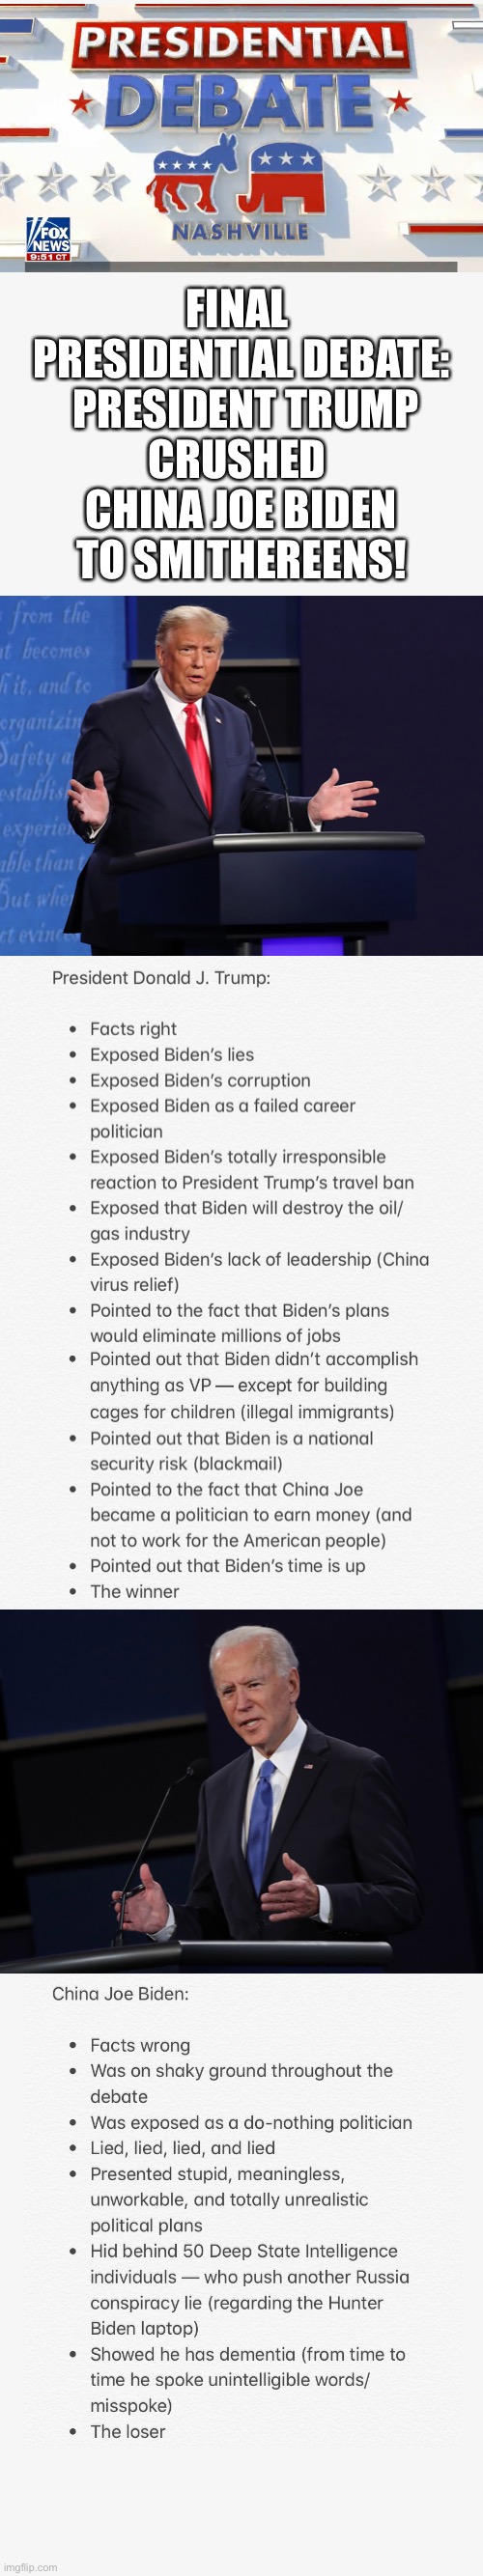 Final Presidential Debate 2020: President Donald J. Trump crushed China Joe Biden to smithereens! | FINAL 
PRESIDENTIAL DEBATE:

 PRESIDENT TRUMP CRUSHED 
CHINA JOE BIDEN TO SMITHEREENS! | image tagged in president trump,donald trump,joe biden,election 2020,presidential debate,trump 2020 | made w/ Imgflip meme maker